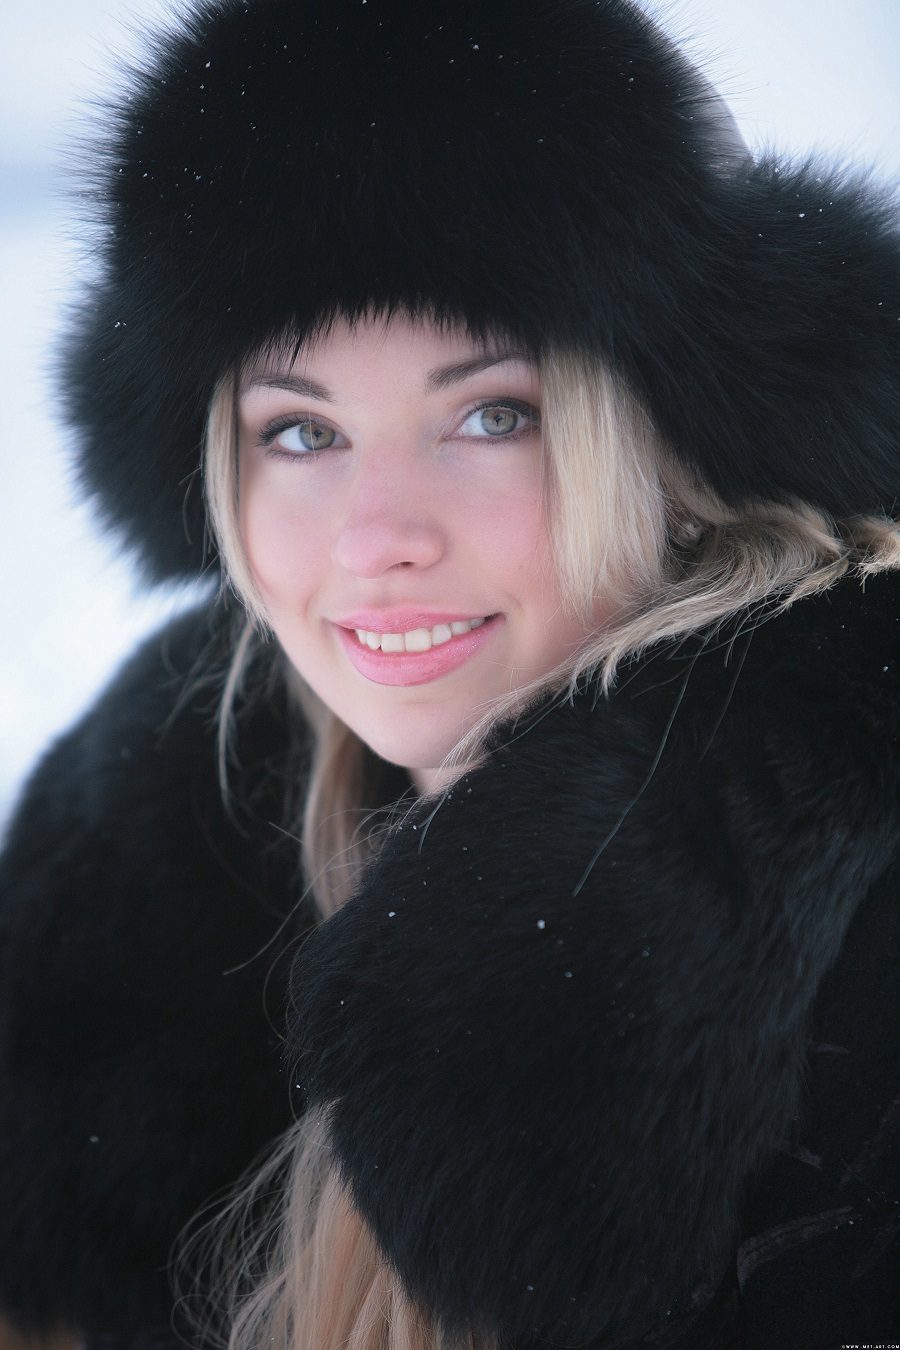 Model Blonde Winter Coats Fur Cap Fur Open Mouth Makeup Closeup Women Women Outdoors Smiling 900x1350